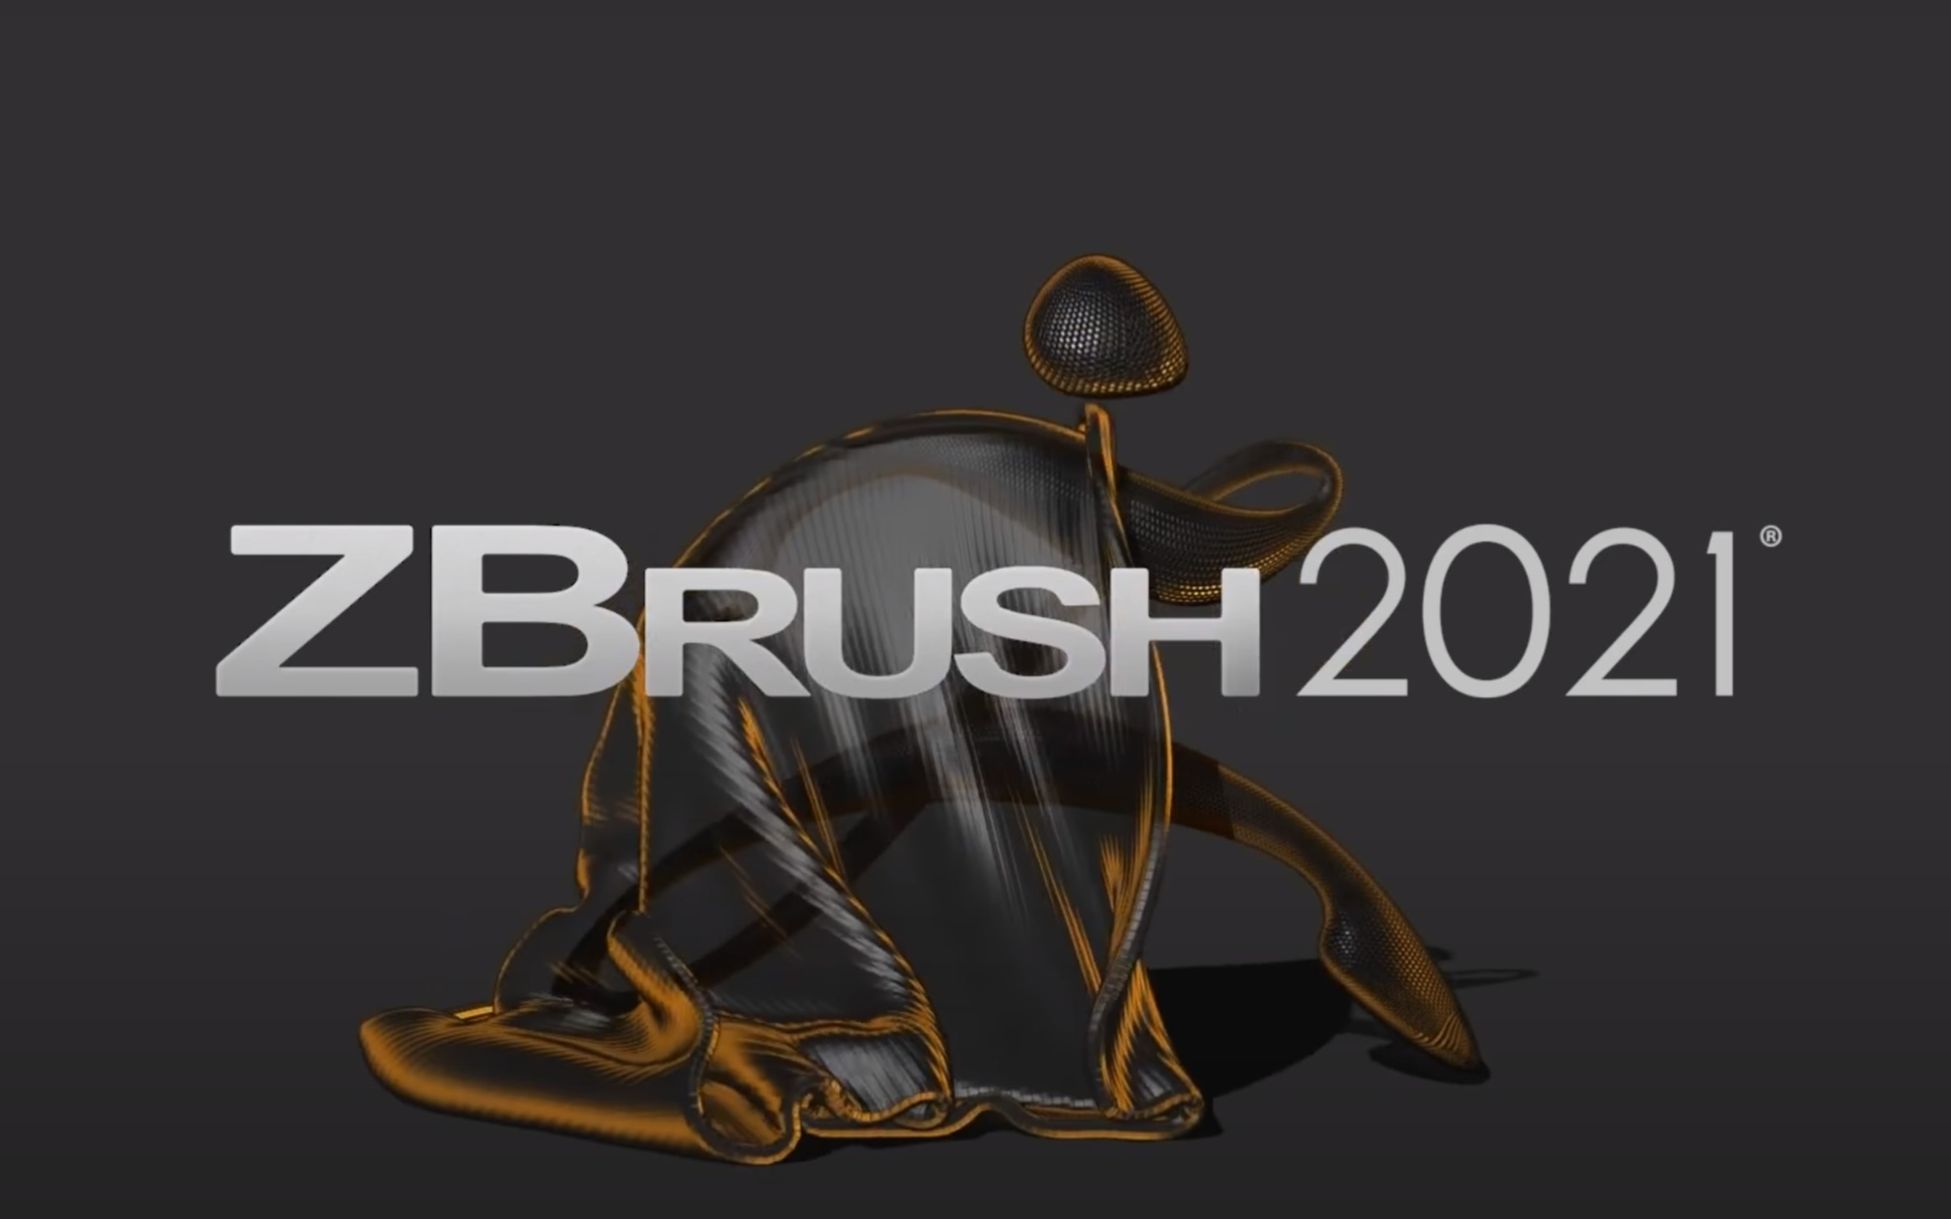 zbrush 2021.7 free download